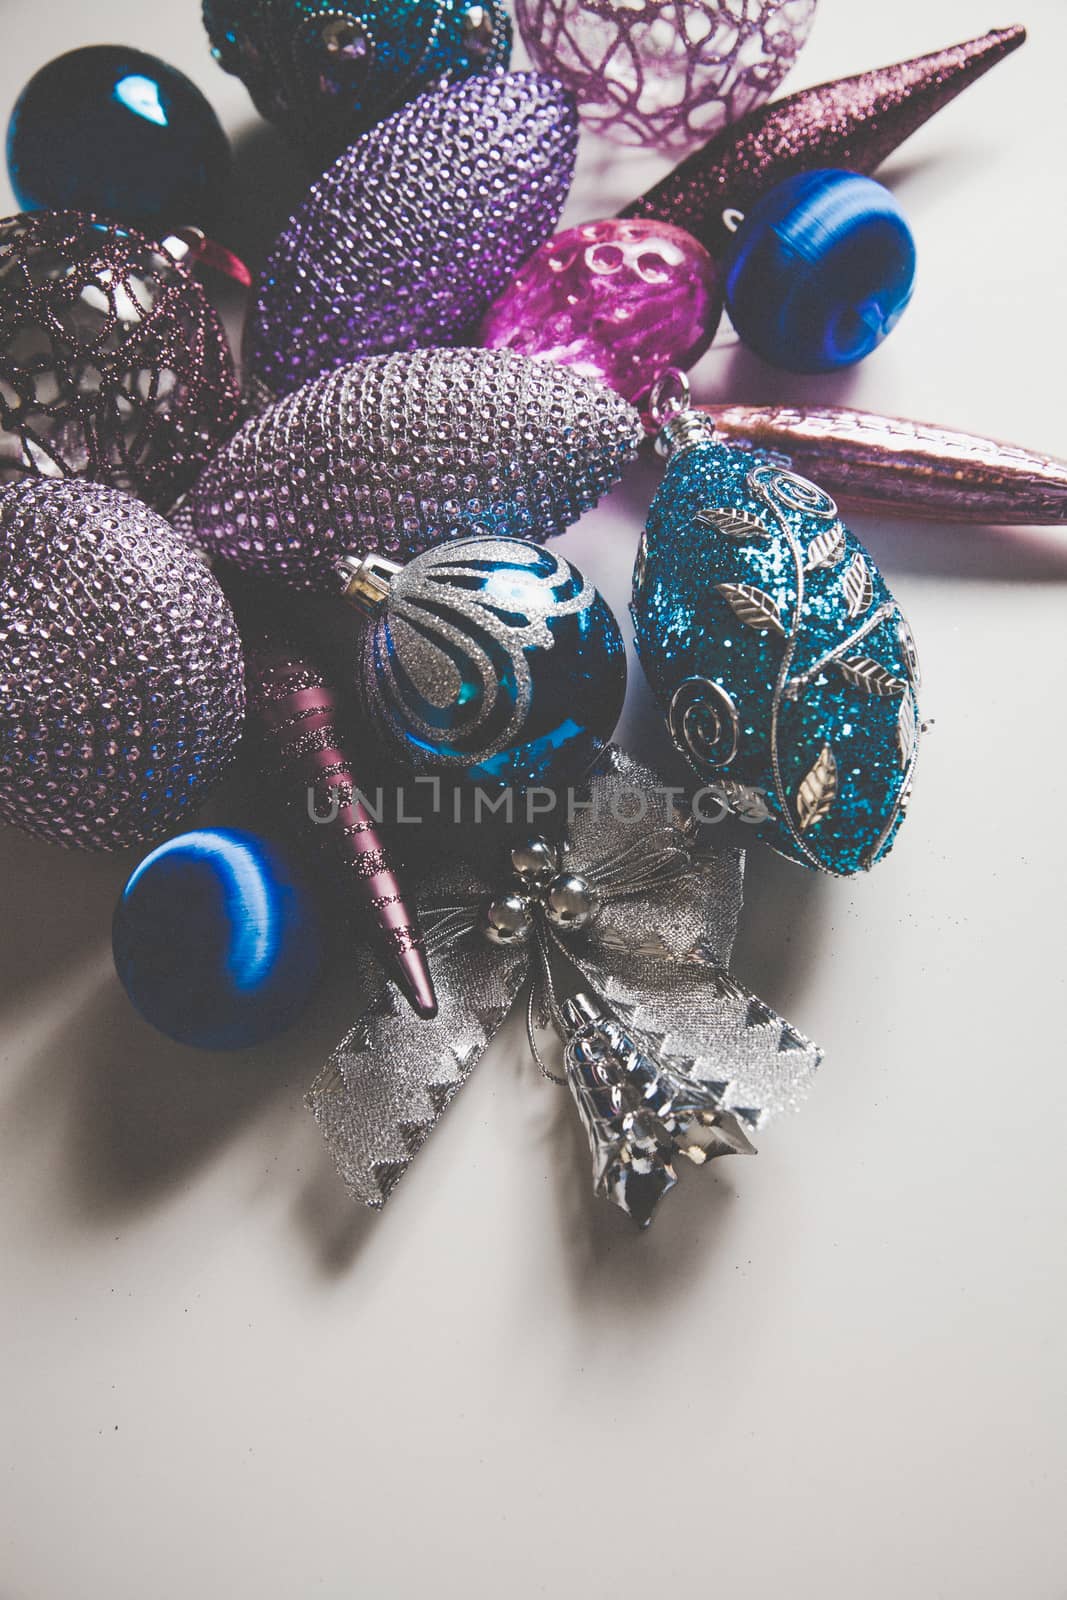 Elegant Christmas 2019 decor closeup, blue and pink colors by mi_viri